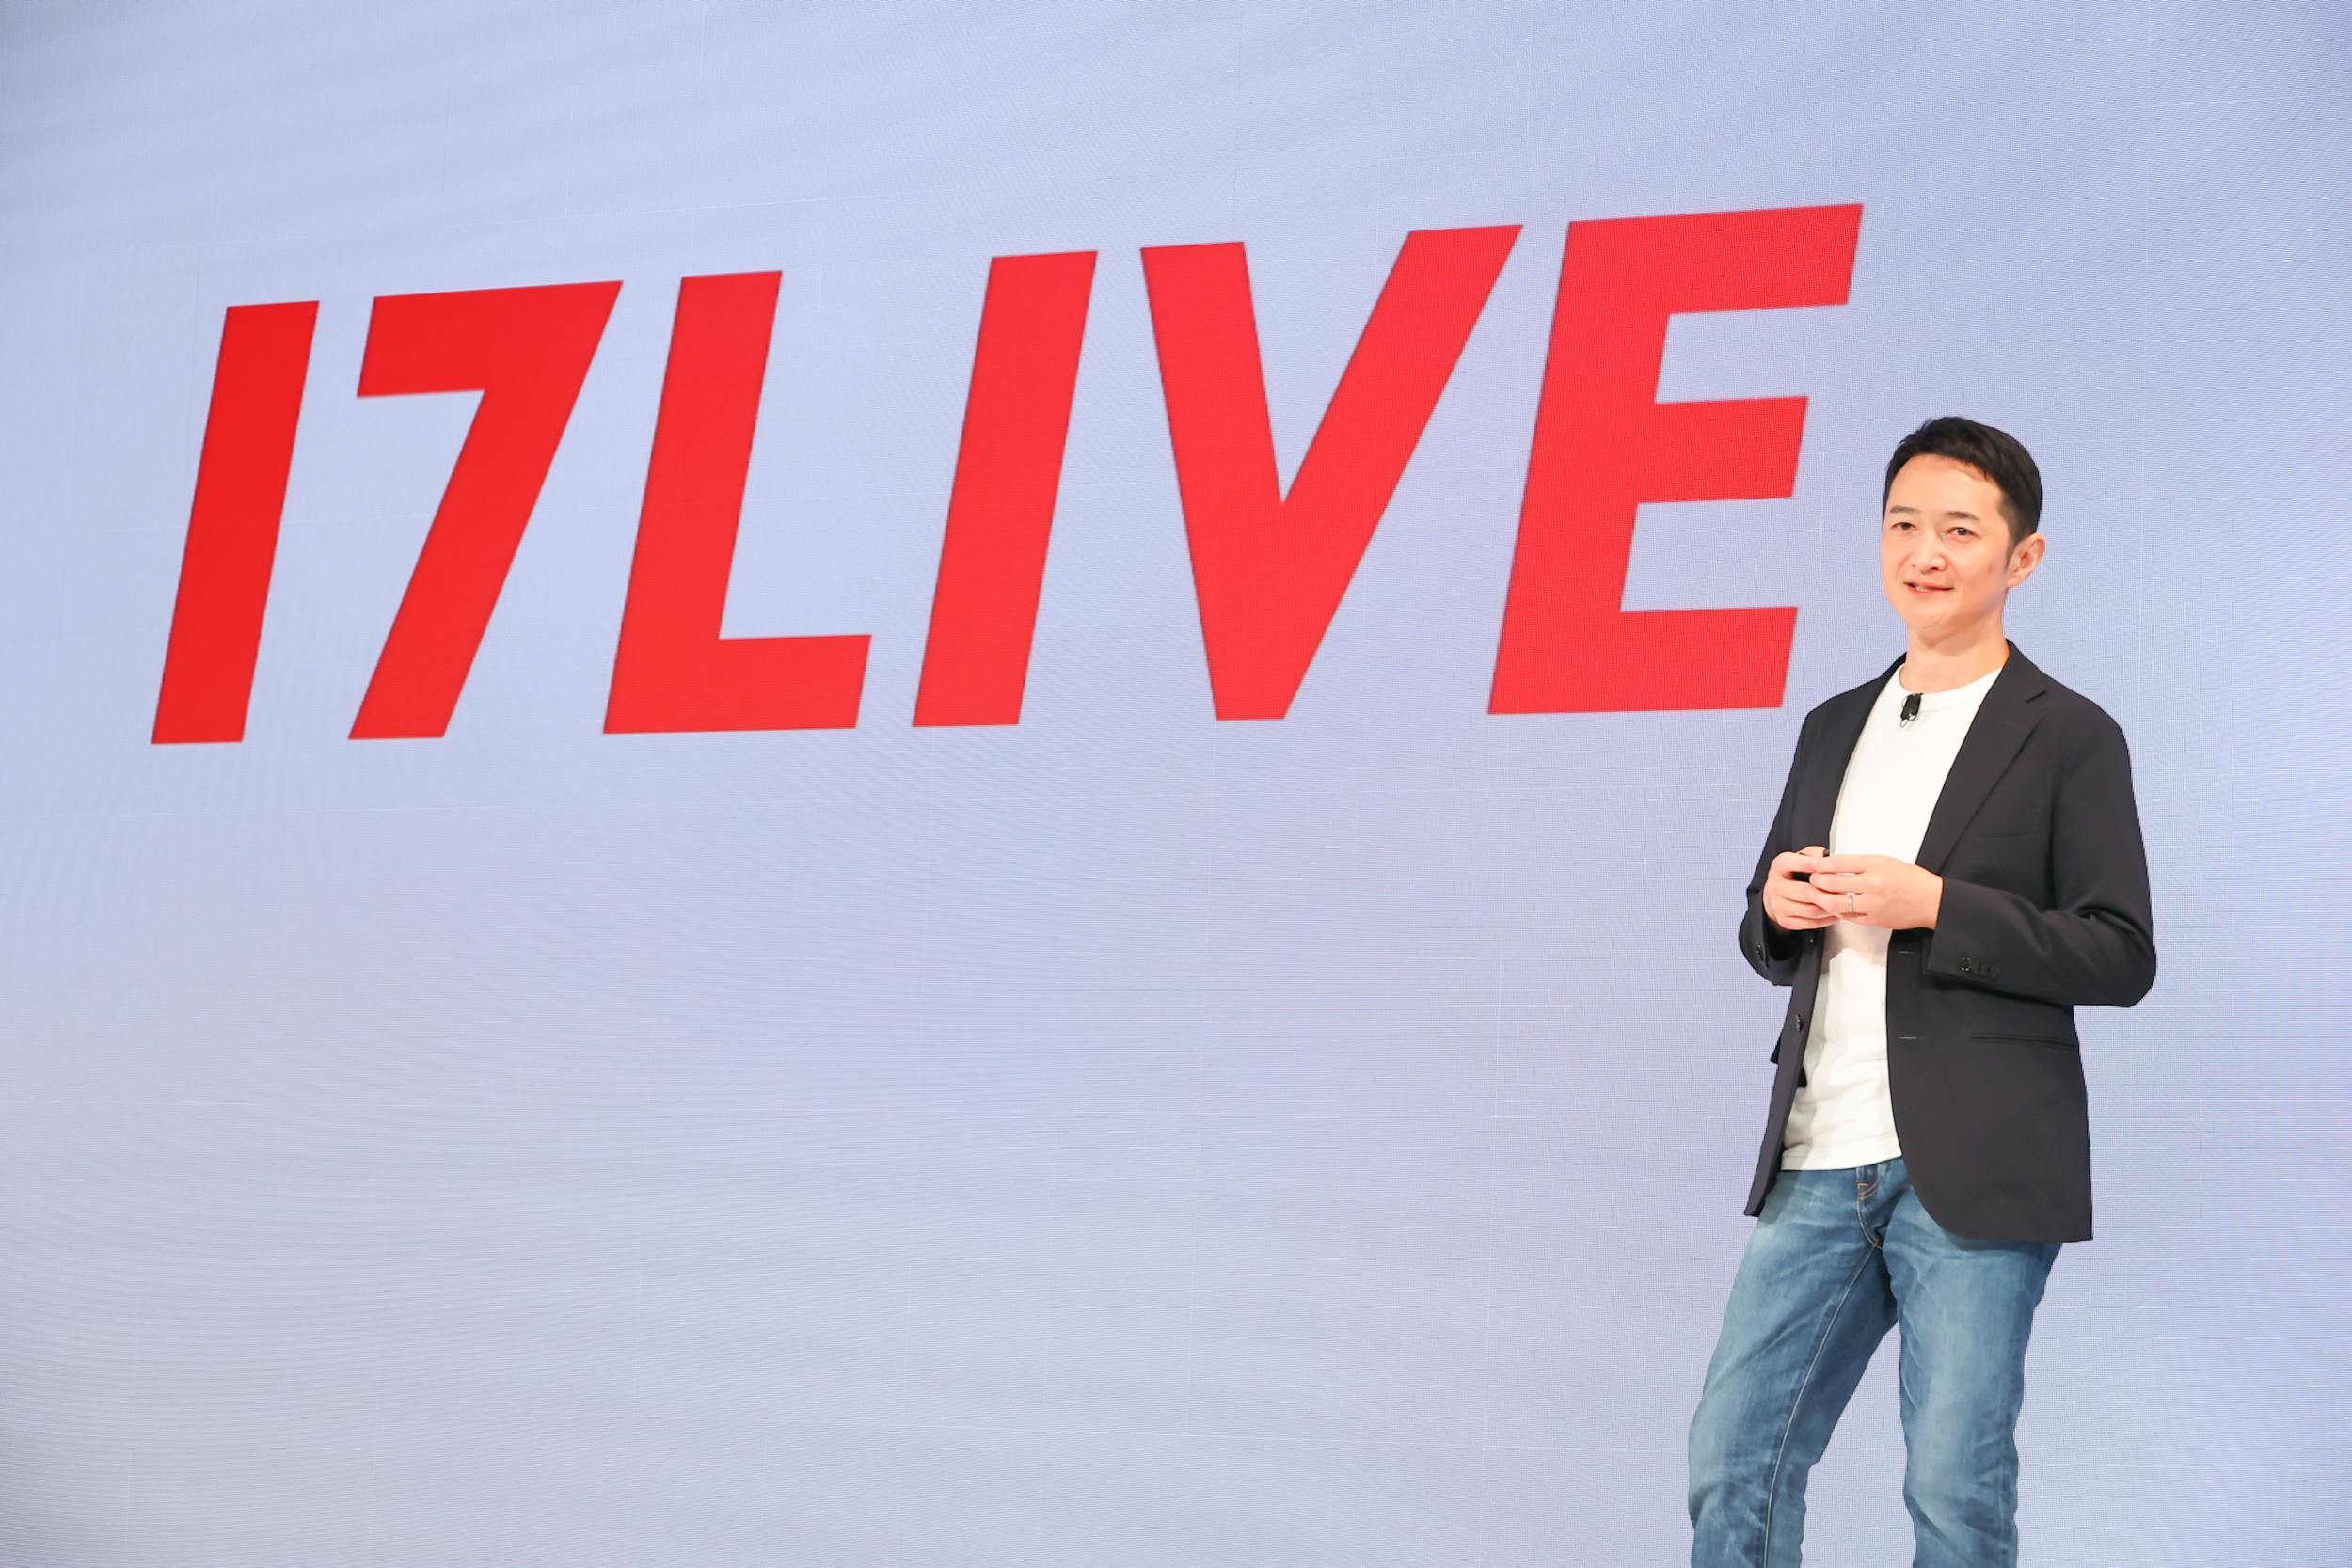 17LIVE集團全球CEO小野裕史分享品牌重塑與全球佈局計畫